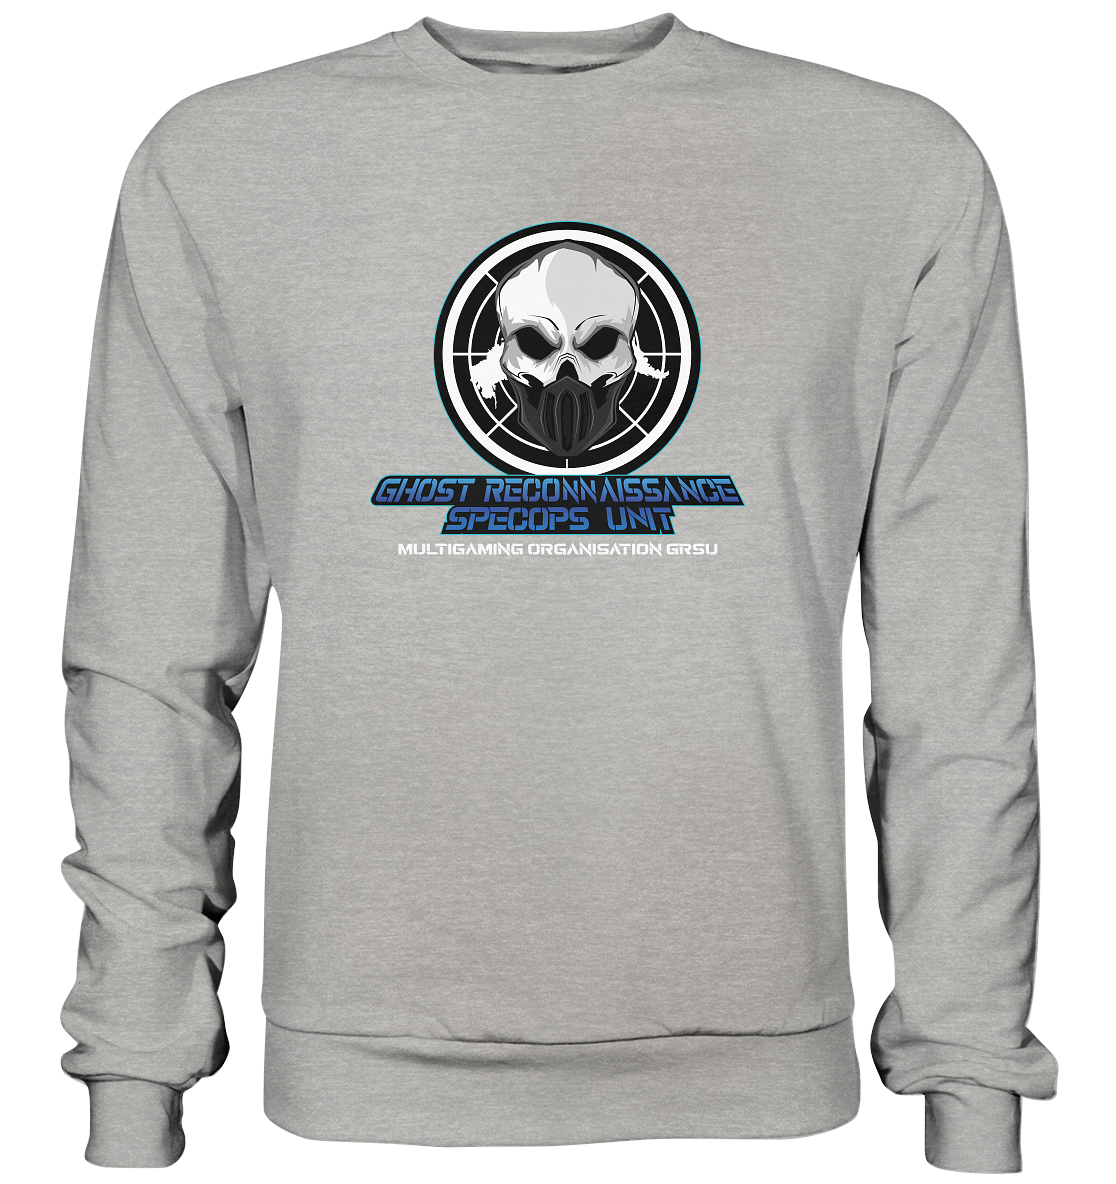 GRSU - Basic Sweatshirt